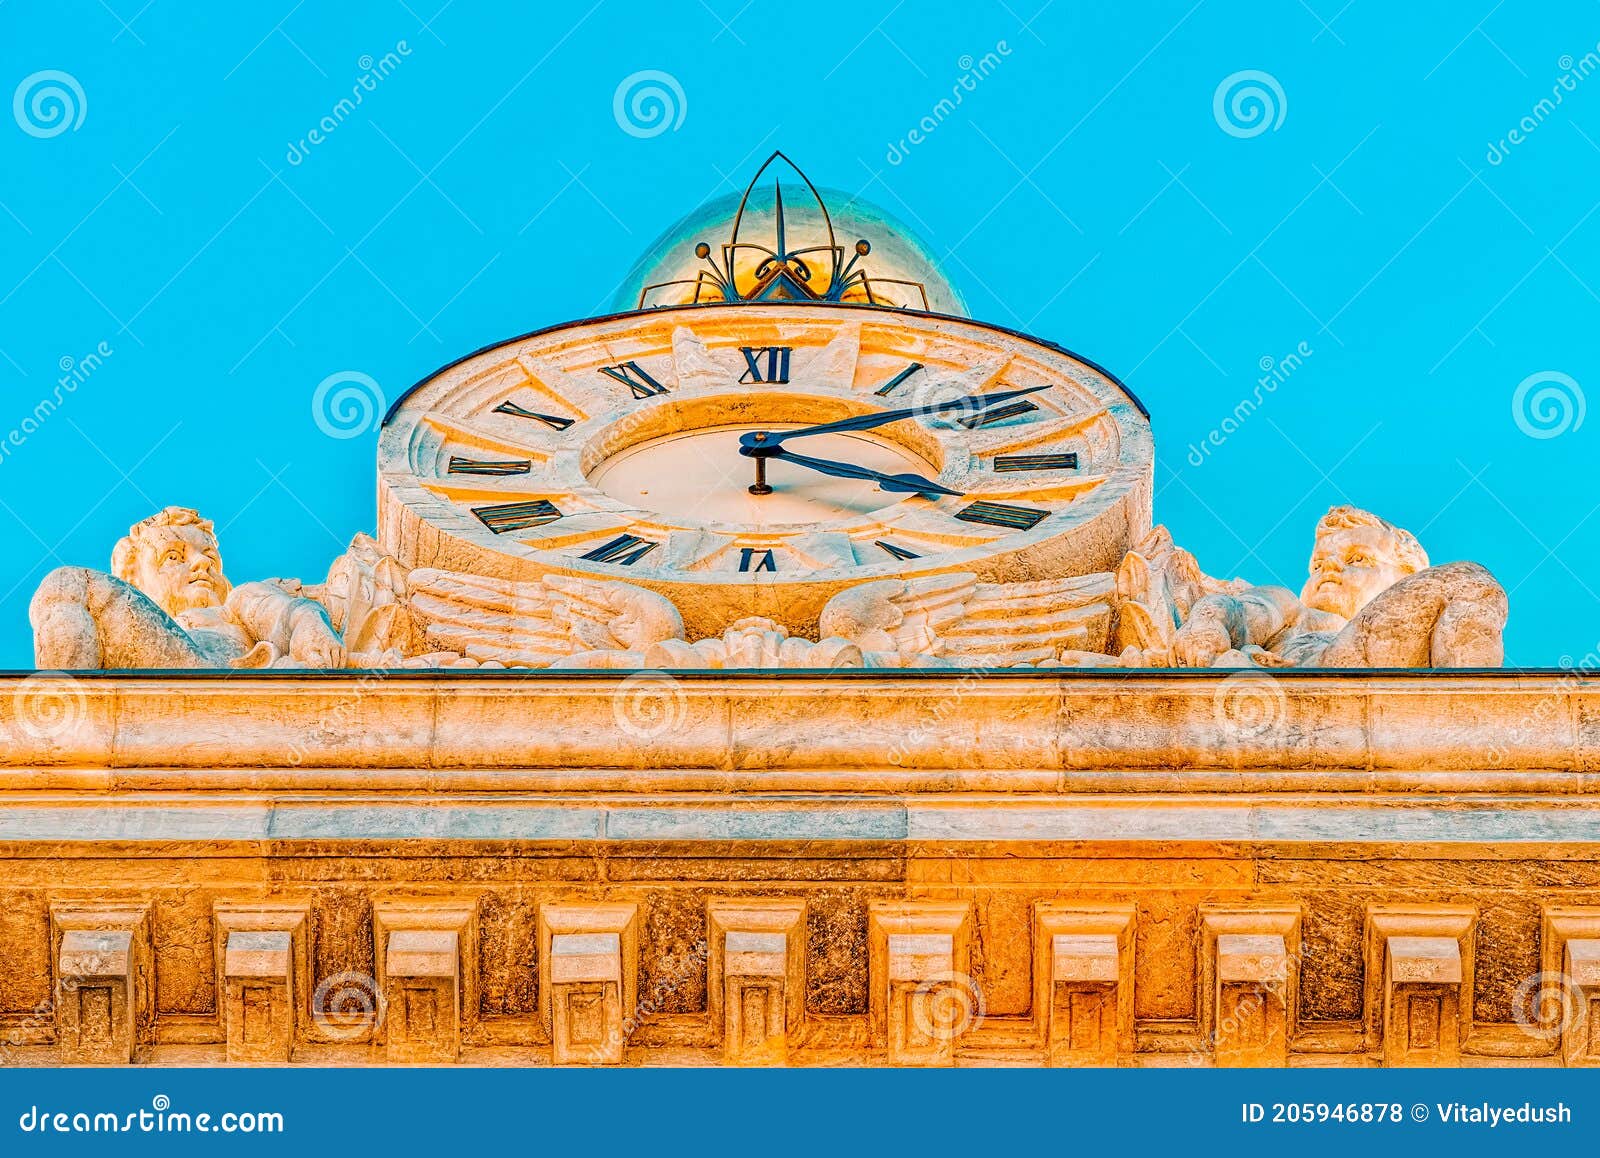 big clock on building bank of spain banco de espana on cibeles